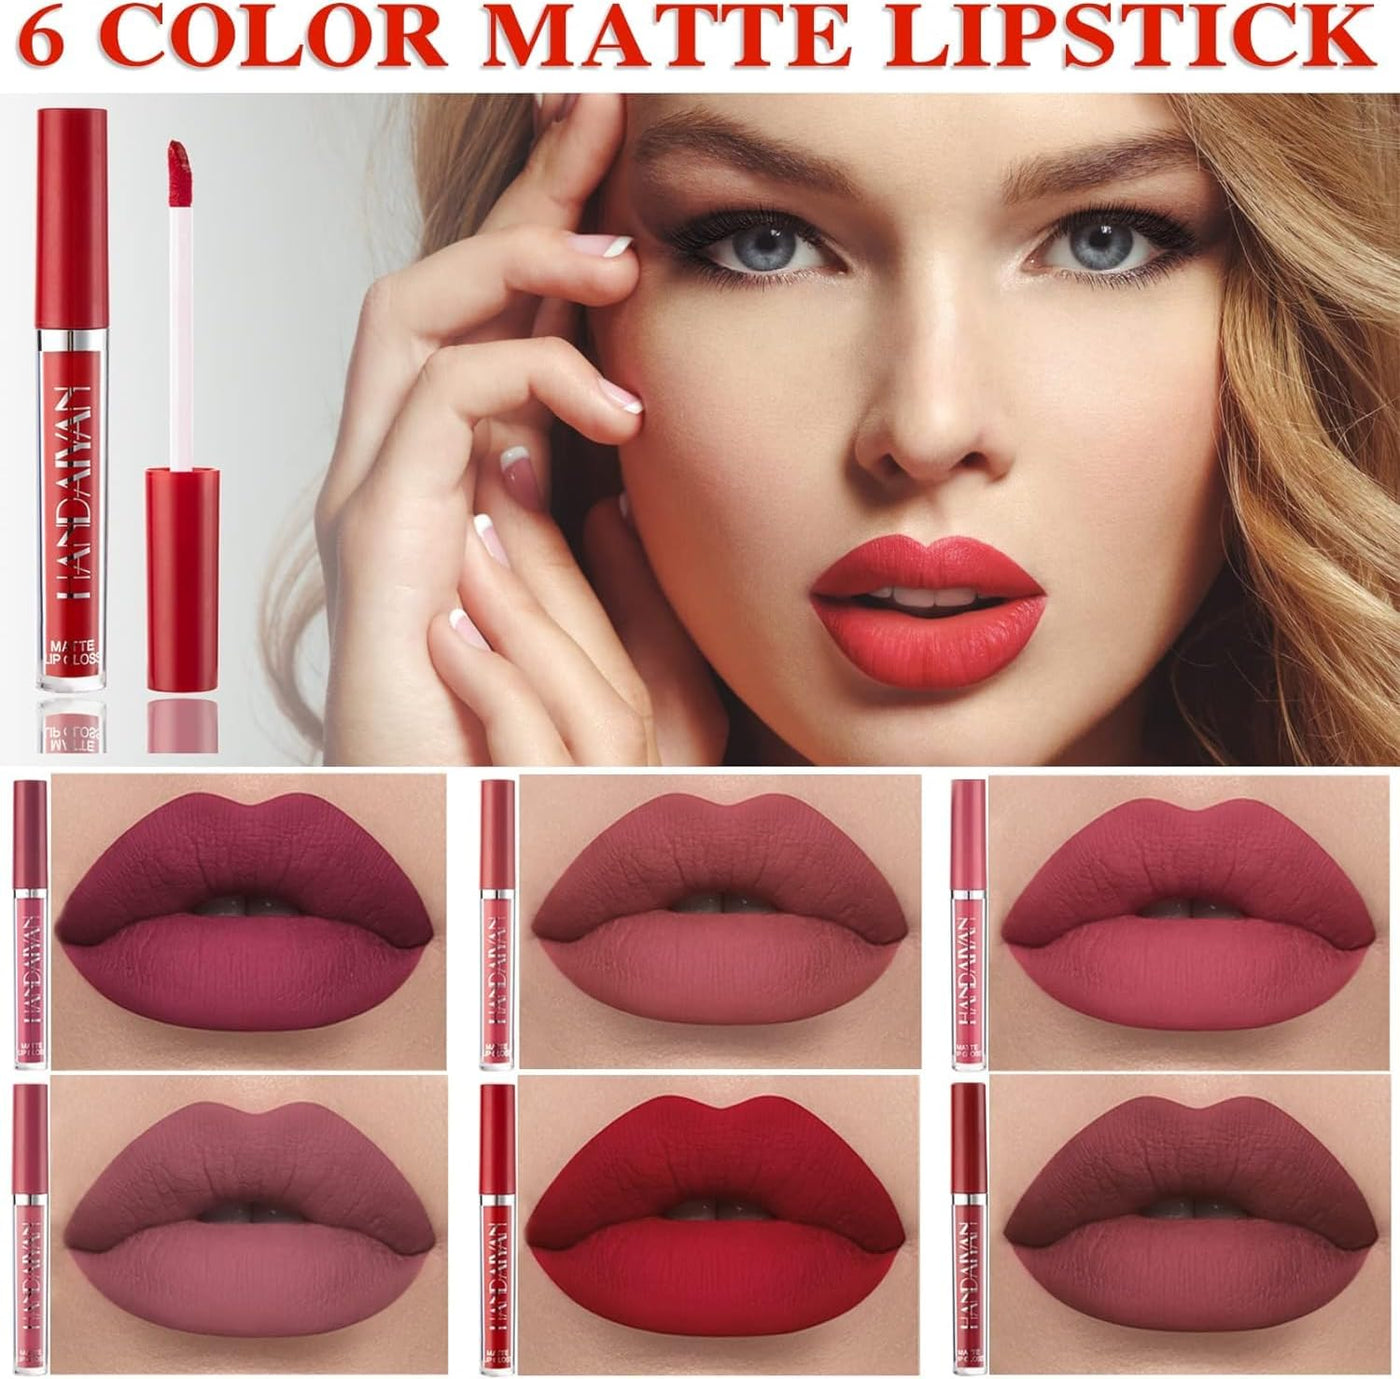 lipsticks 6 Colors Matte Lipstick Set, Velvety Liquid lipstick Red Lipstick Nude Lipstick Long Lasting Waterproof Non-Stick Cup Lip Gloss Sets for Woman (A)